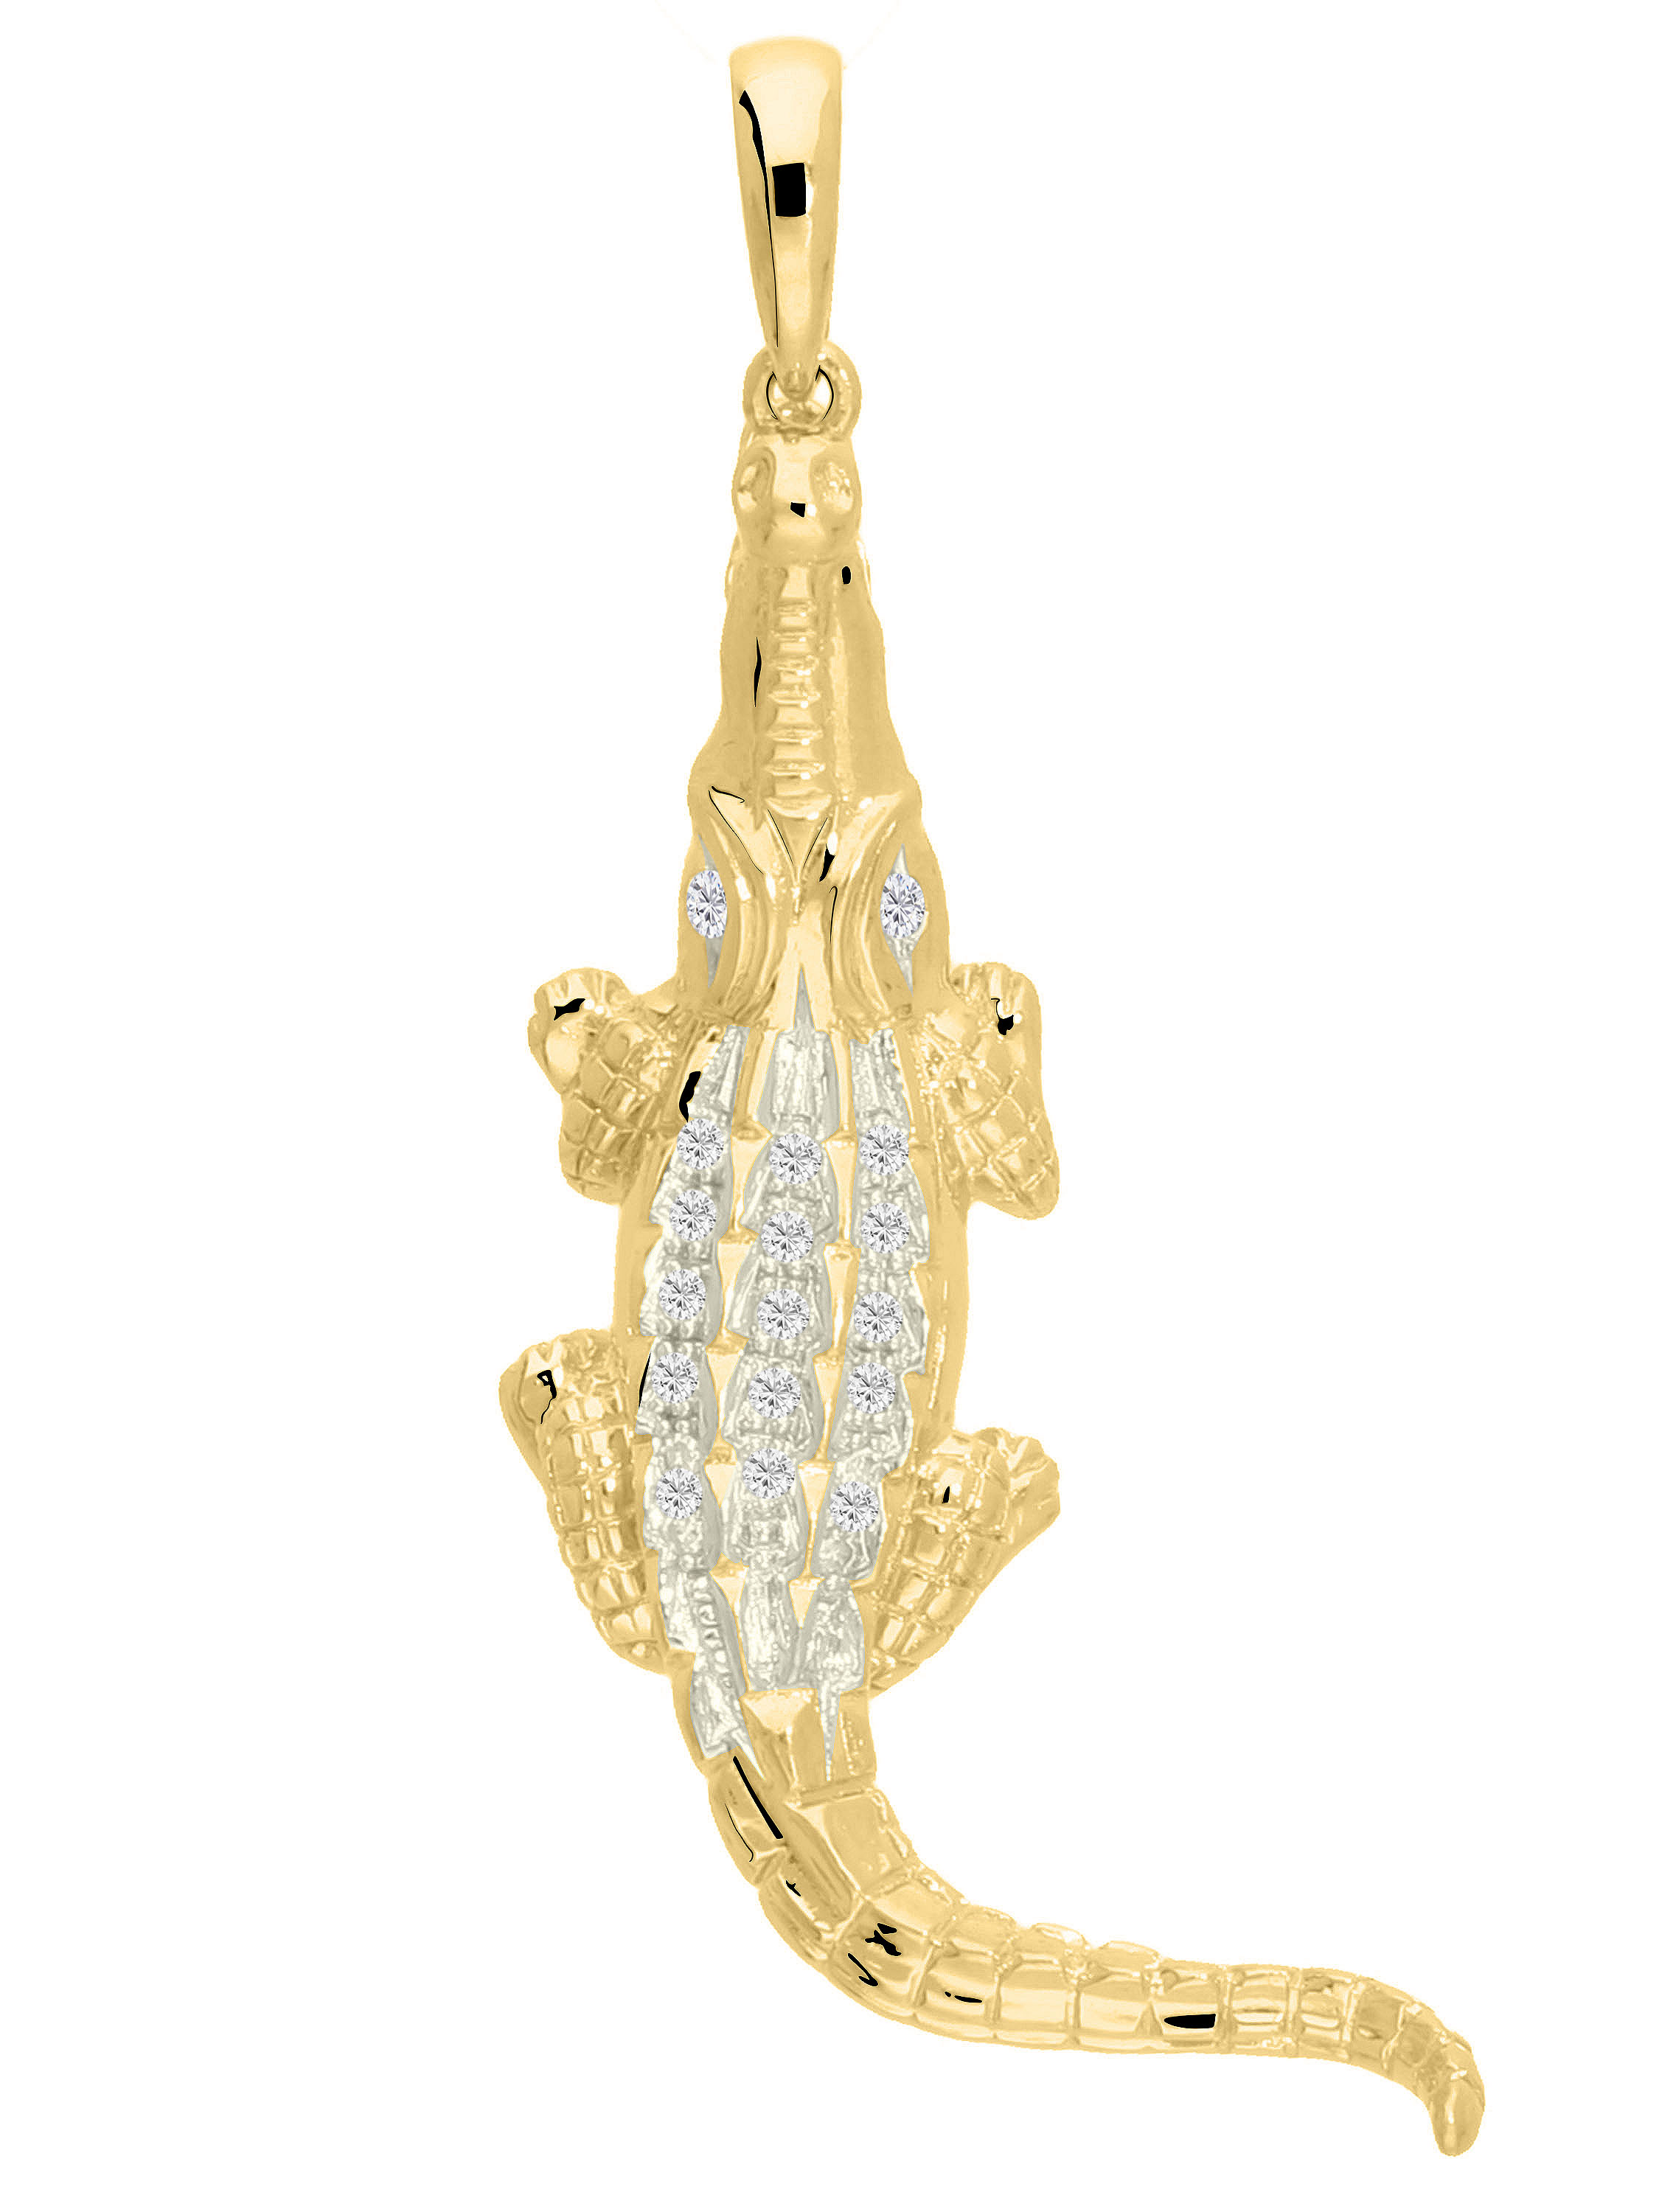 Jean - Krokodil Diamanten Motivanhänger Gold - 0,075ct.